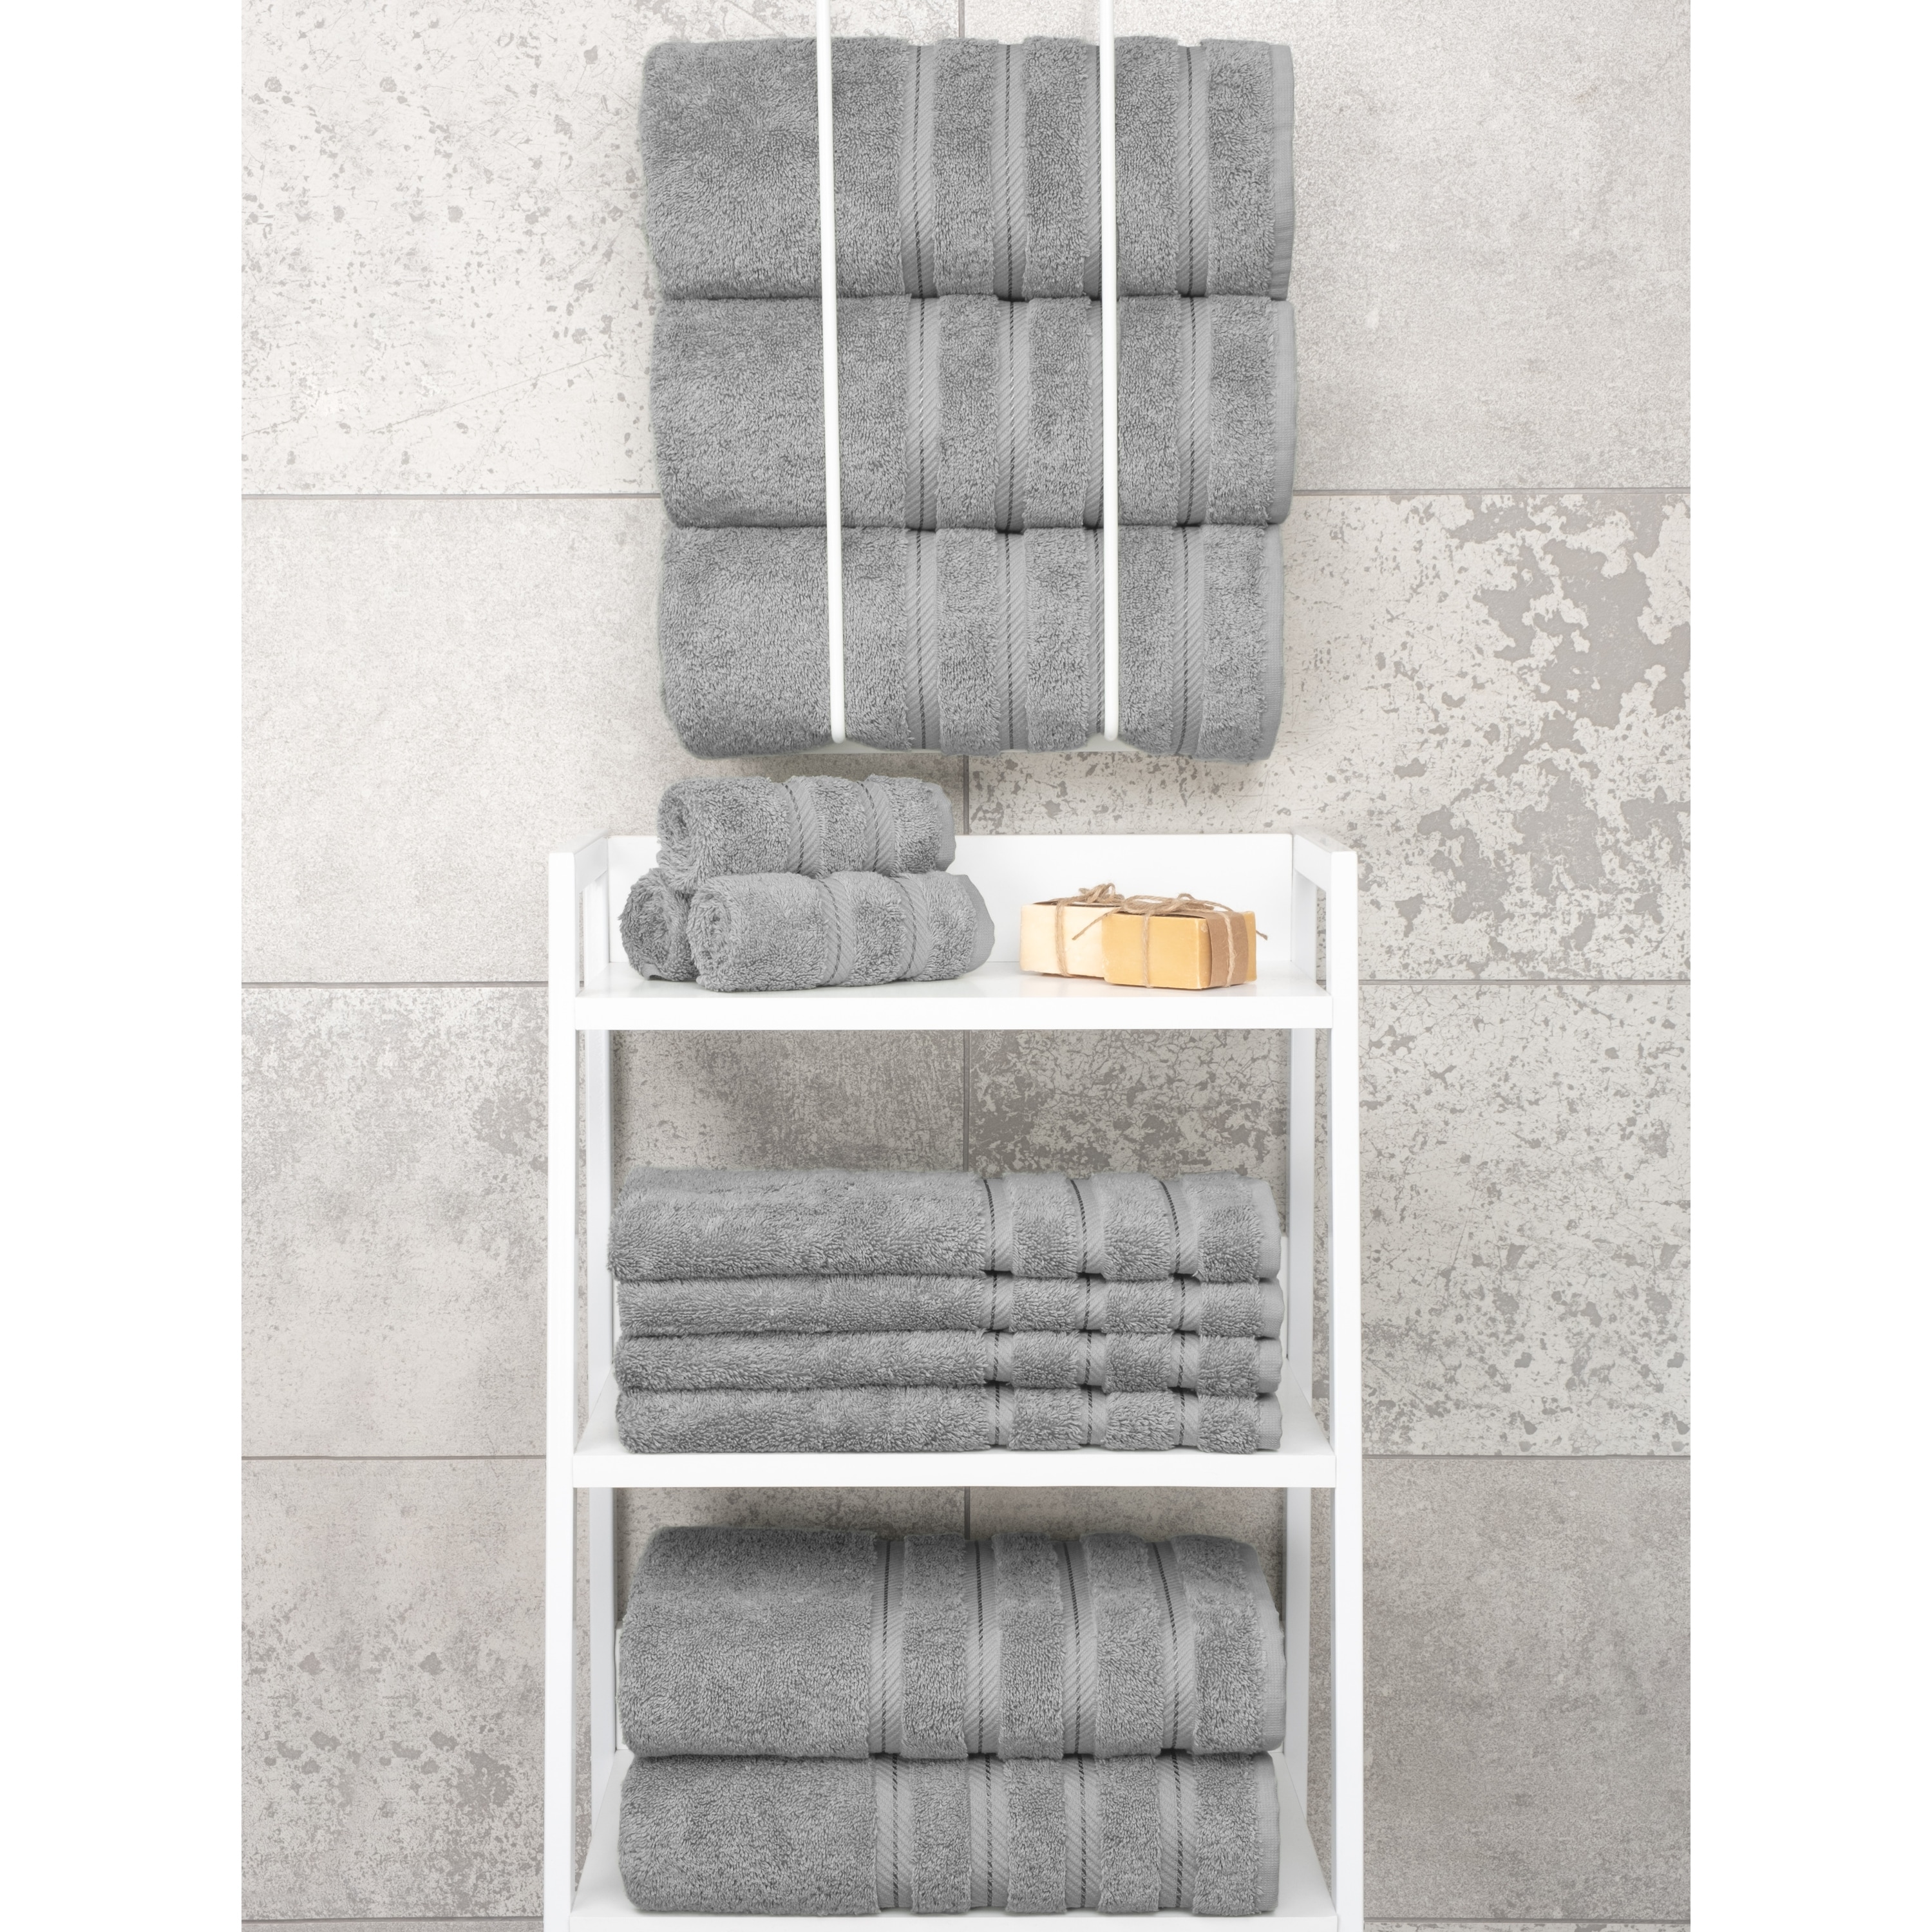 American Soft Linen Bath Towel Set, 4 Piece 100% Turkish Cotton Bath Towels,  27x54 inches Super Soft Towels for Bathroom, Malibu Peach Edis4BathSkyE134  - The Home Depot